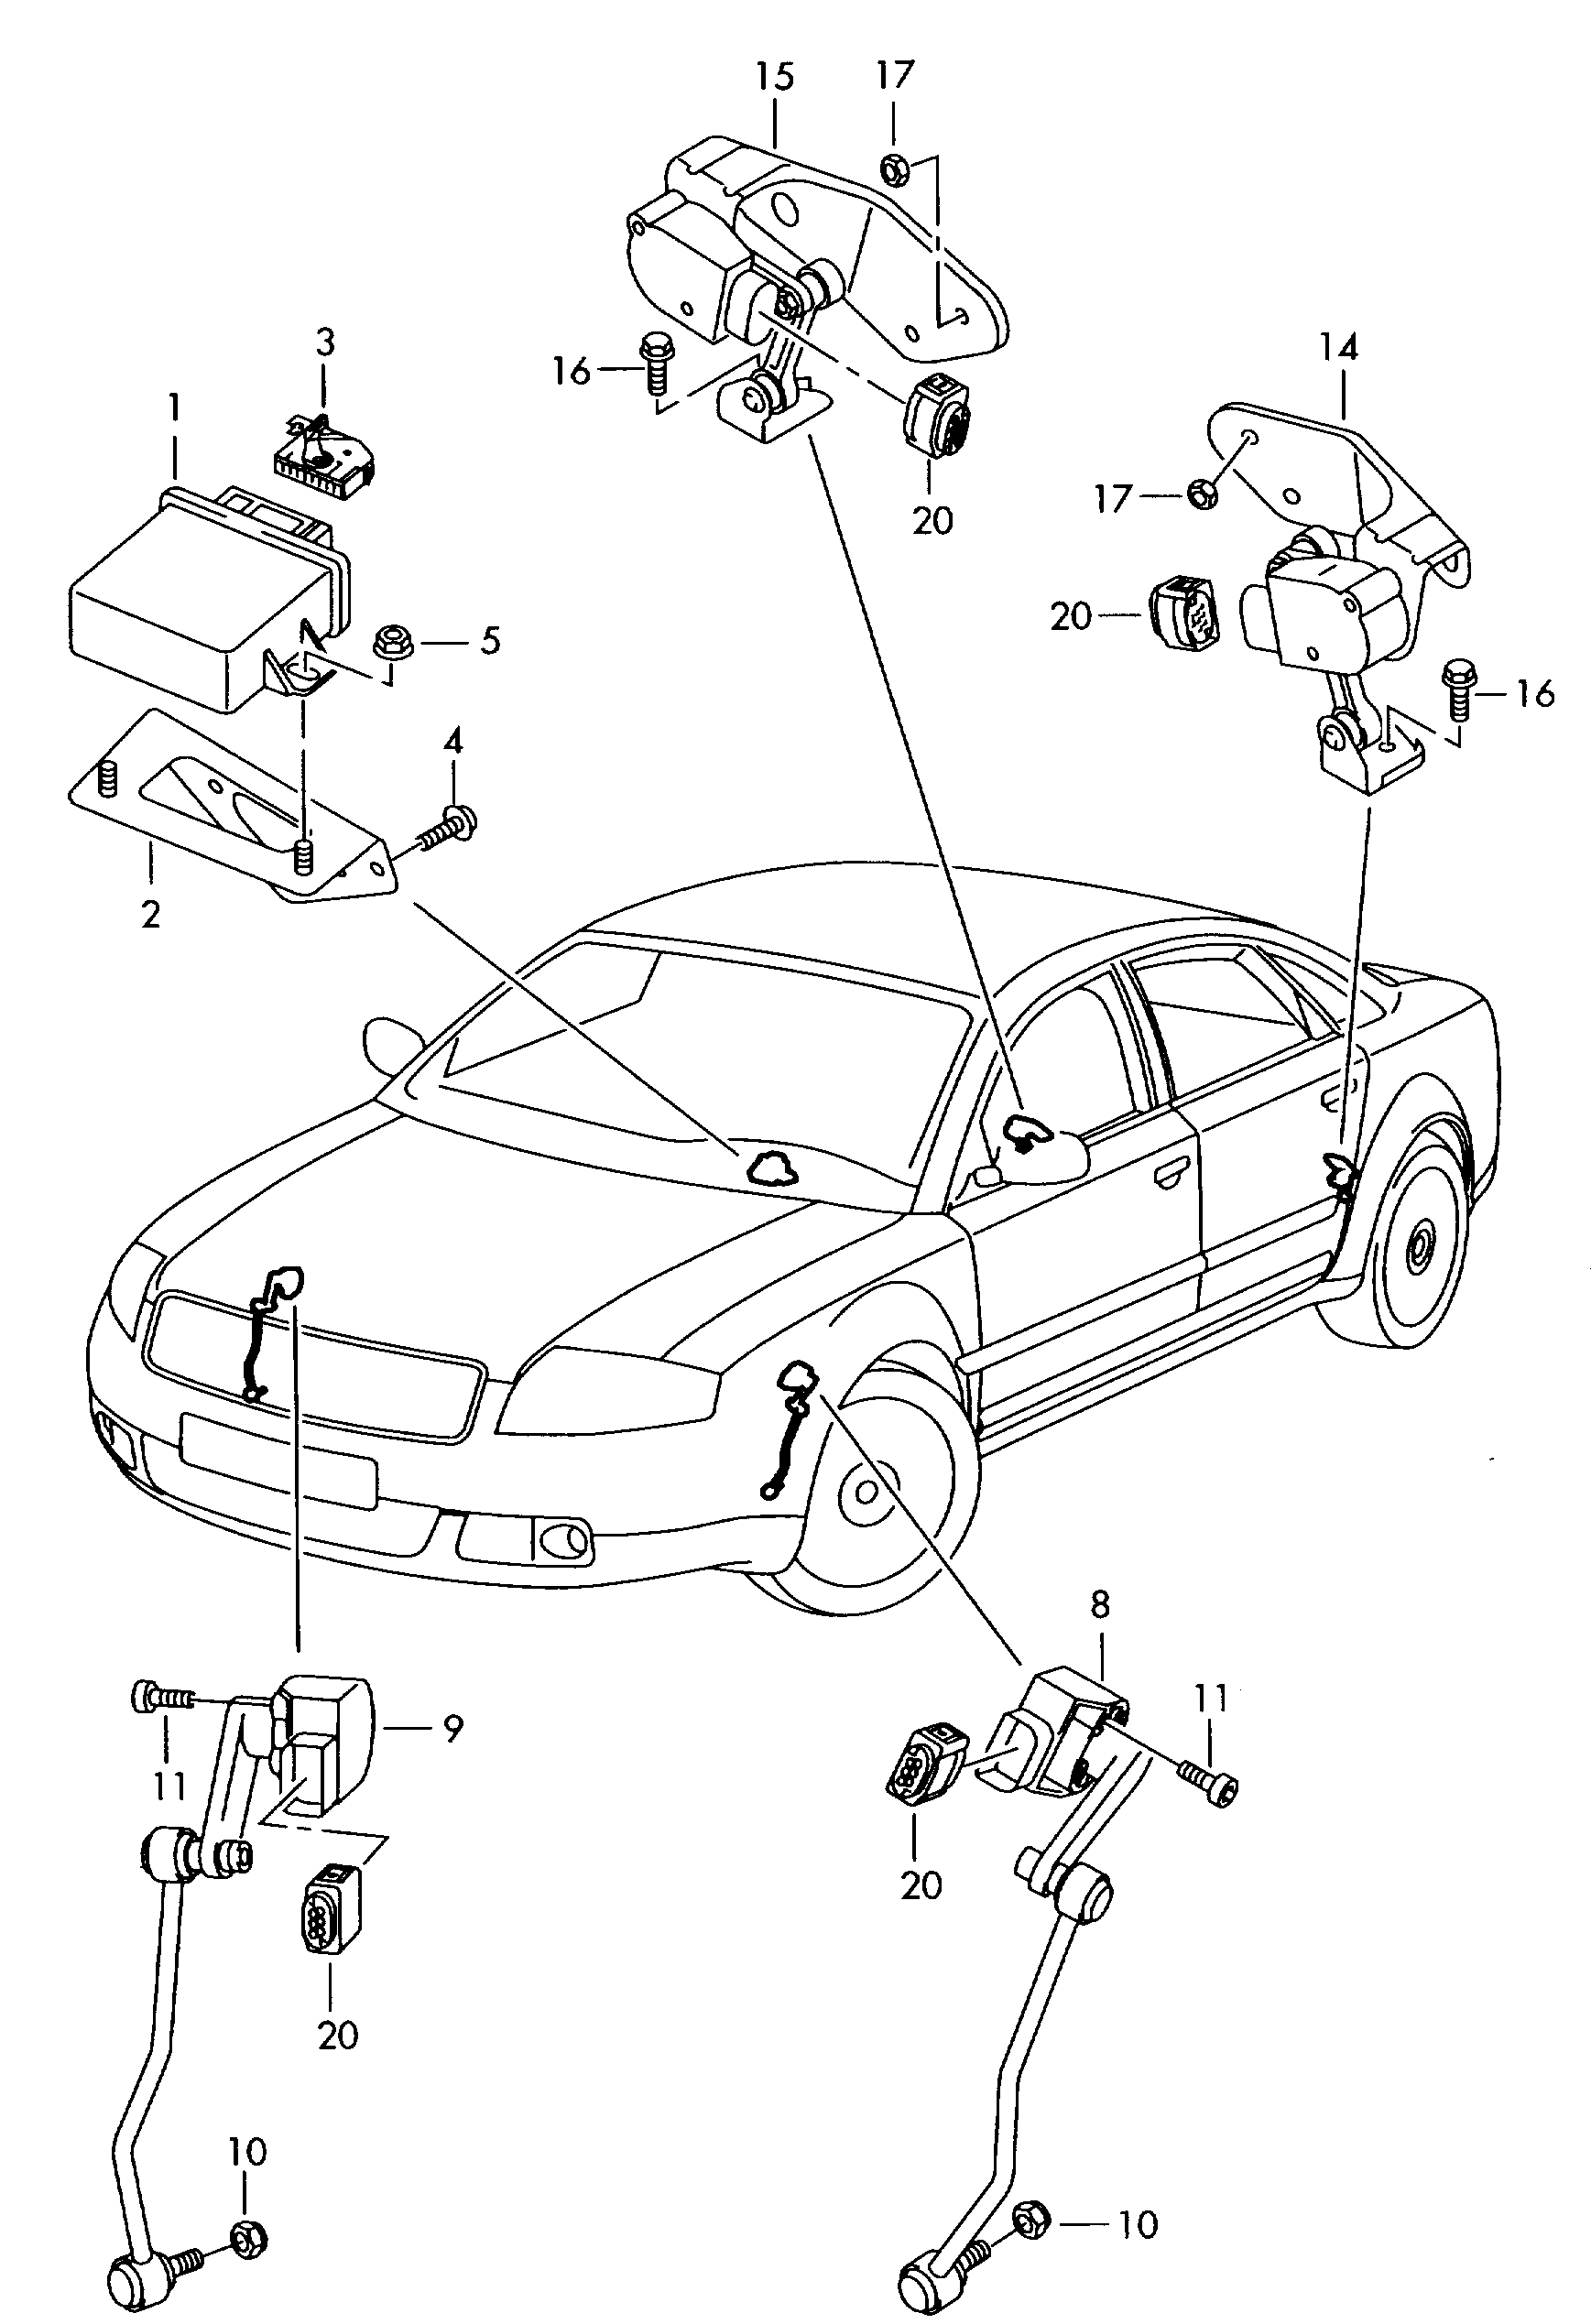 control unit for headlight
range control - Audi A8(A8)  